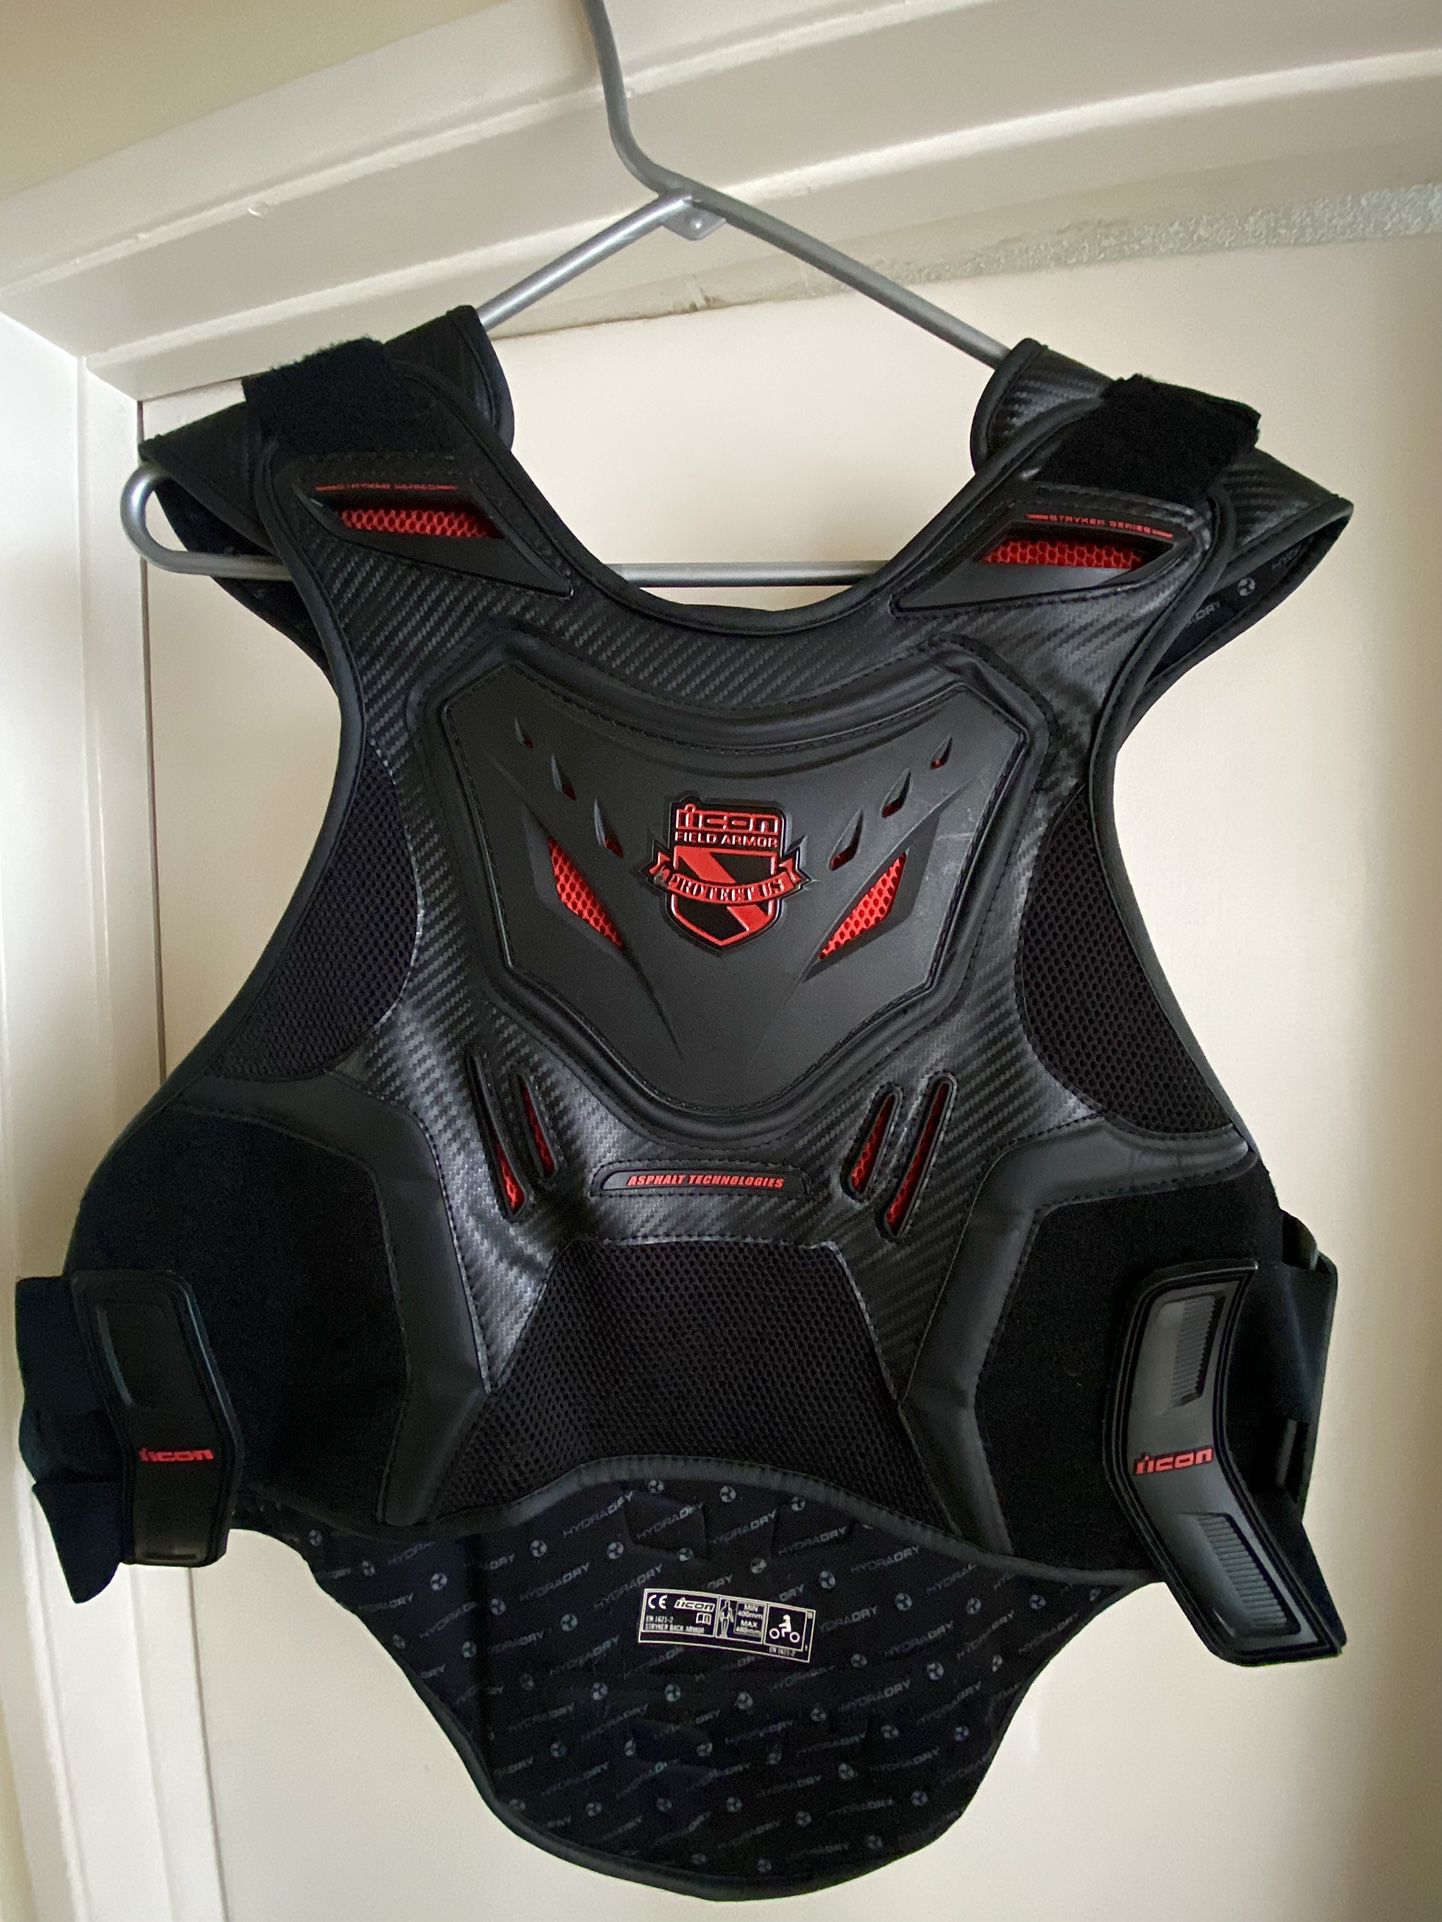 Icon Field Armor Vest 